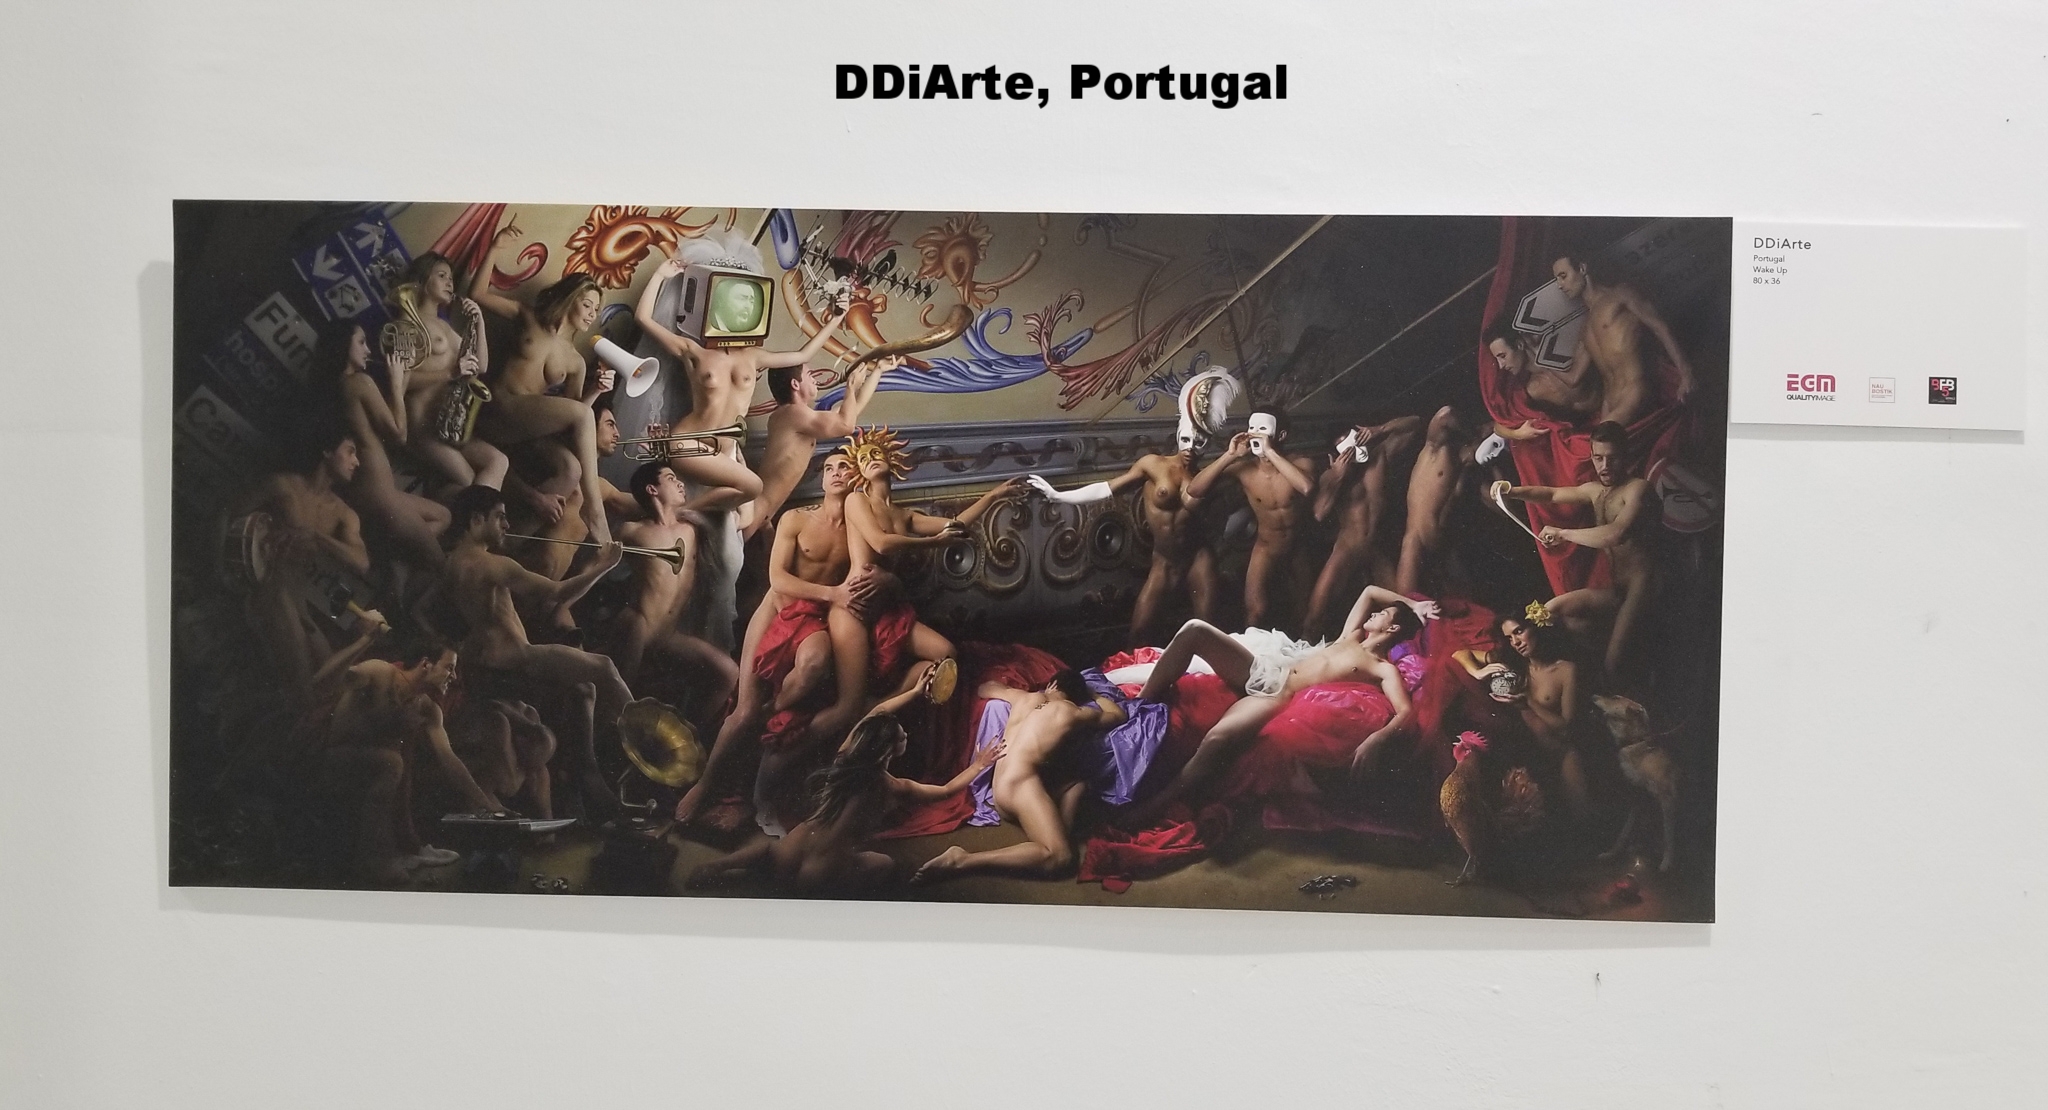 DDiArte, Portugal